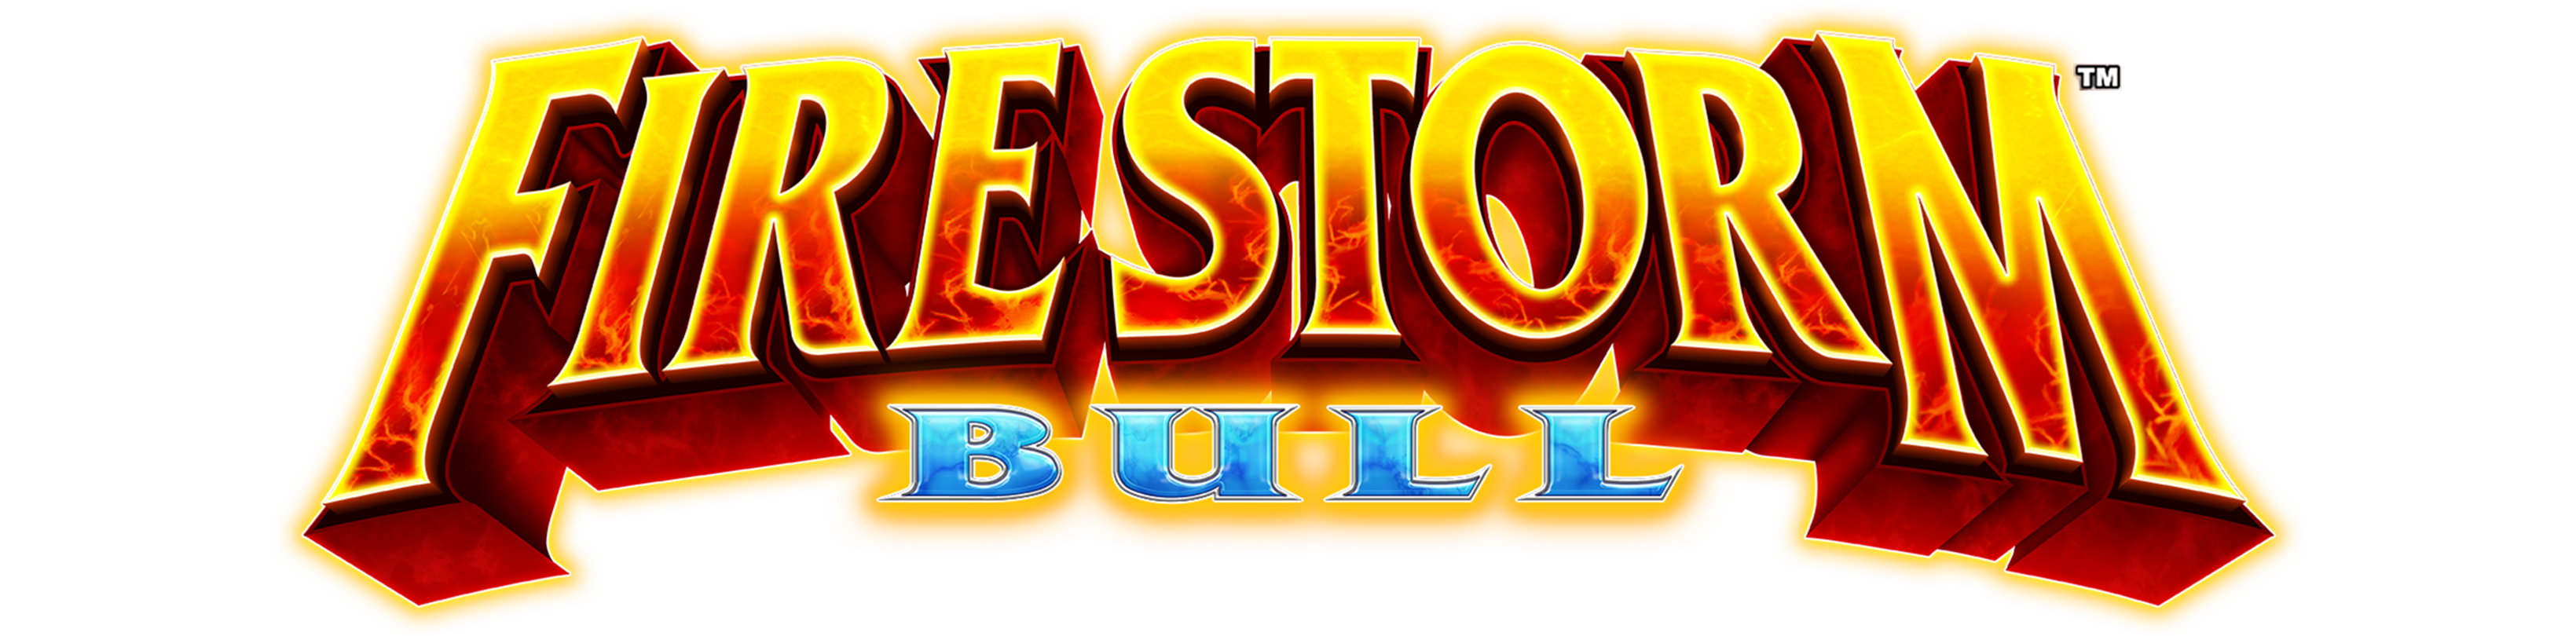 Firestorm Bull